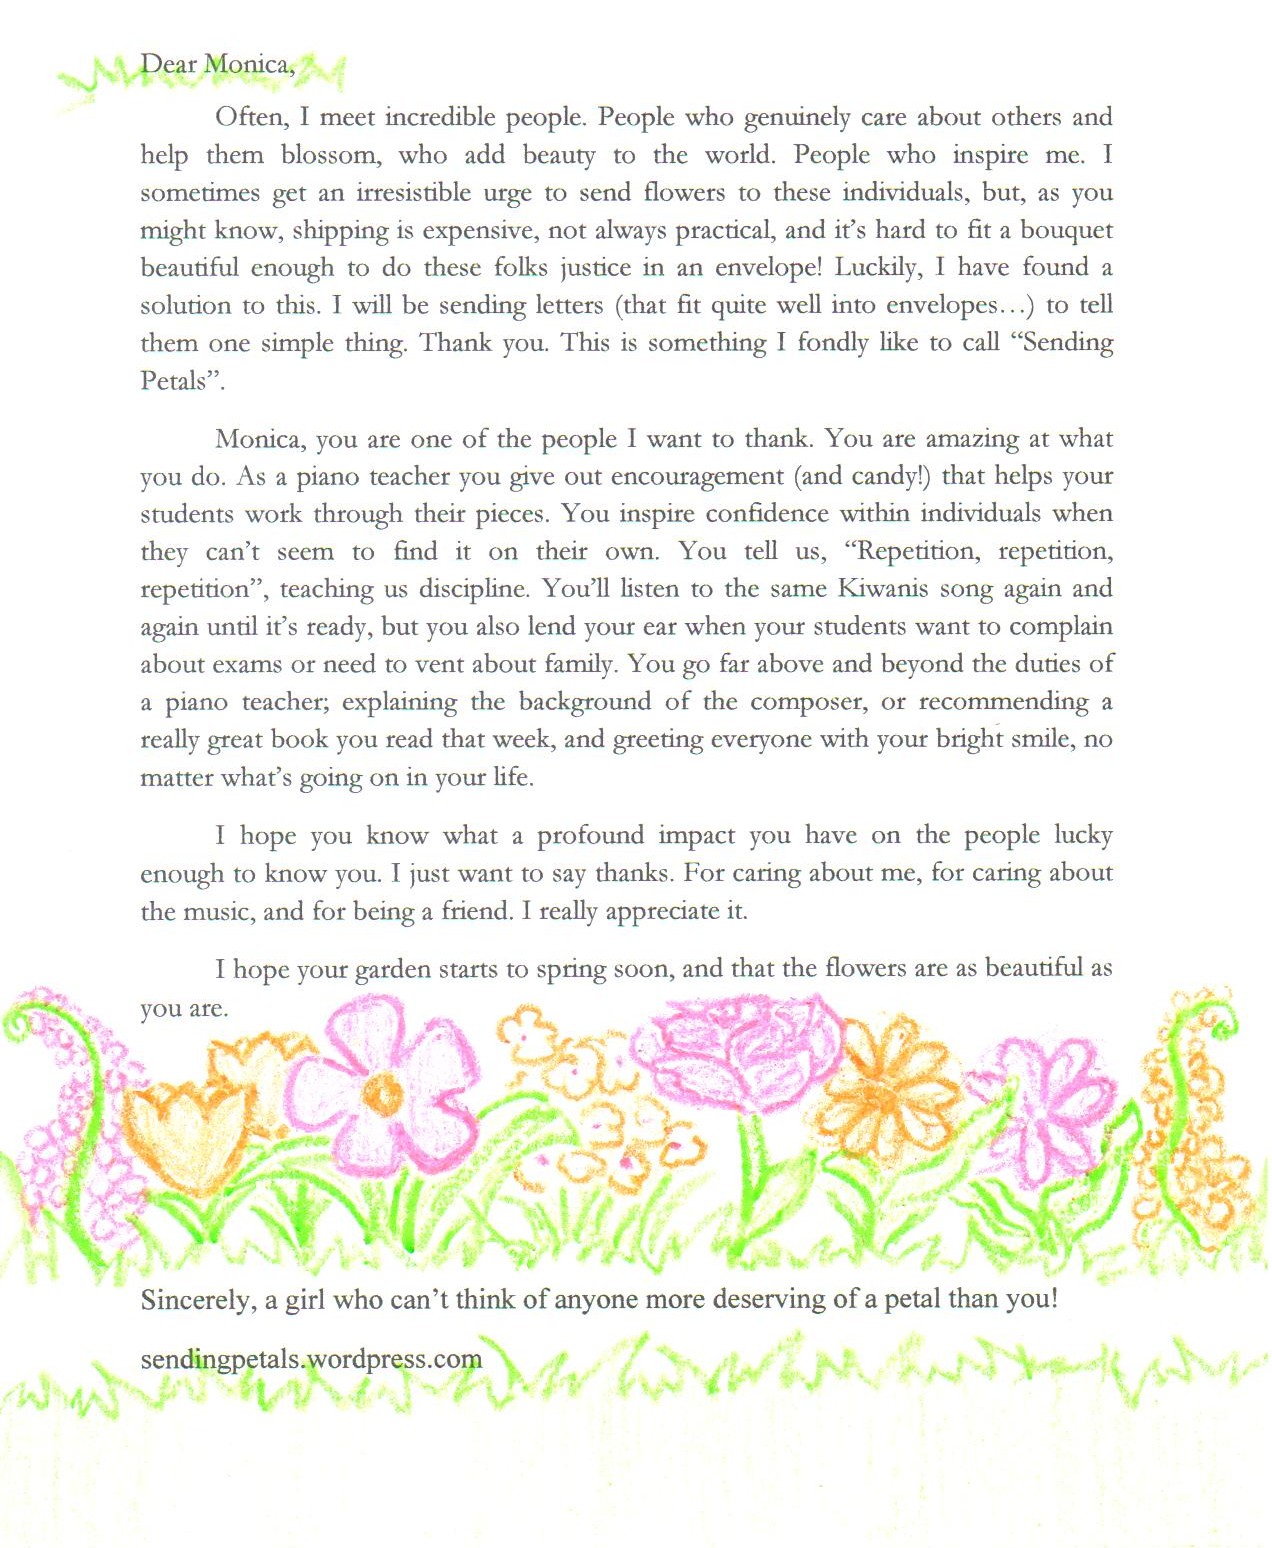 Letter #2: Monica the piano teacher